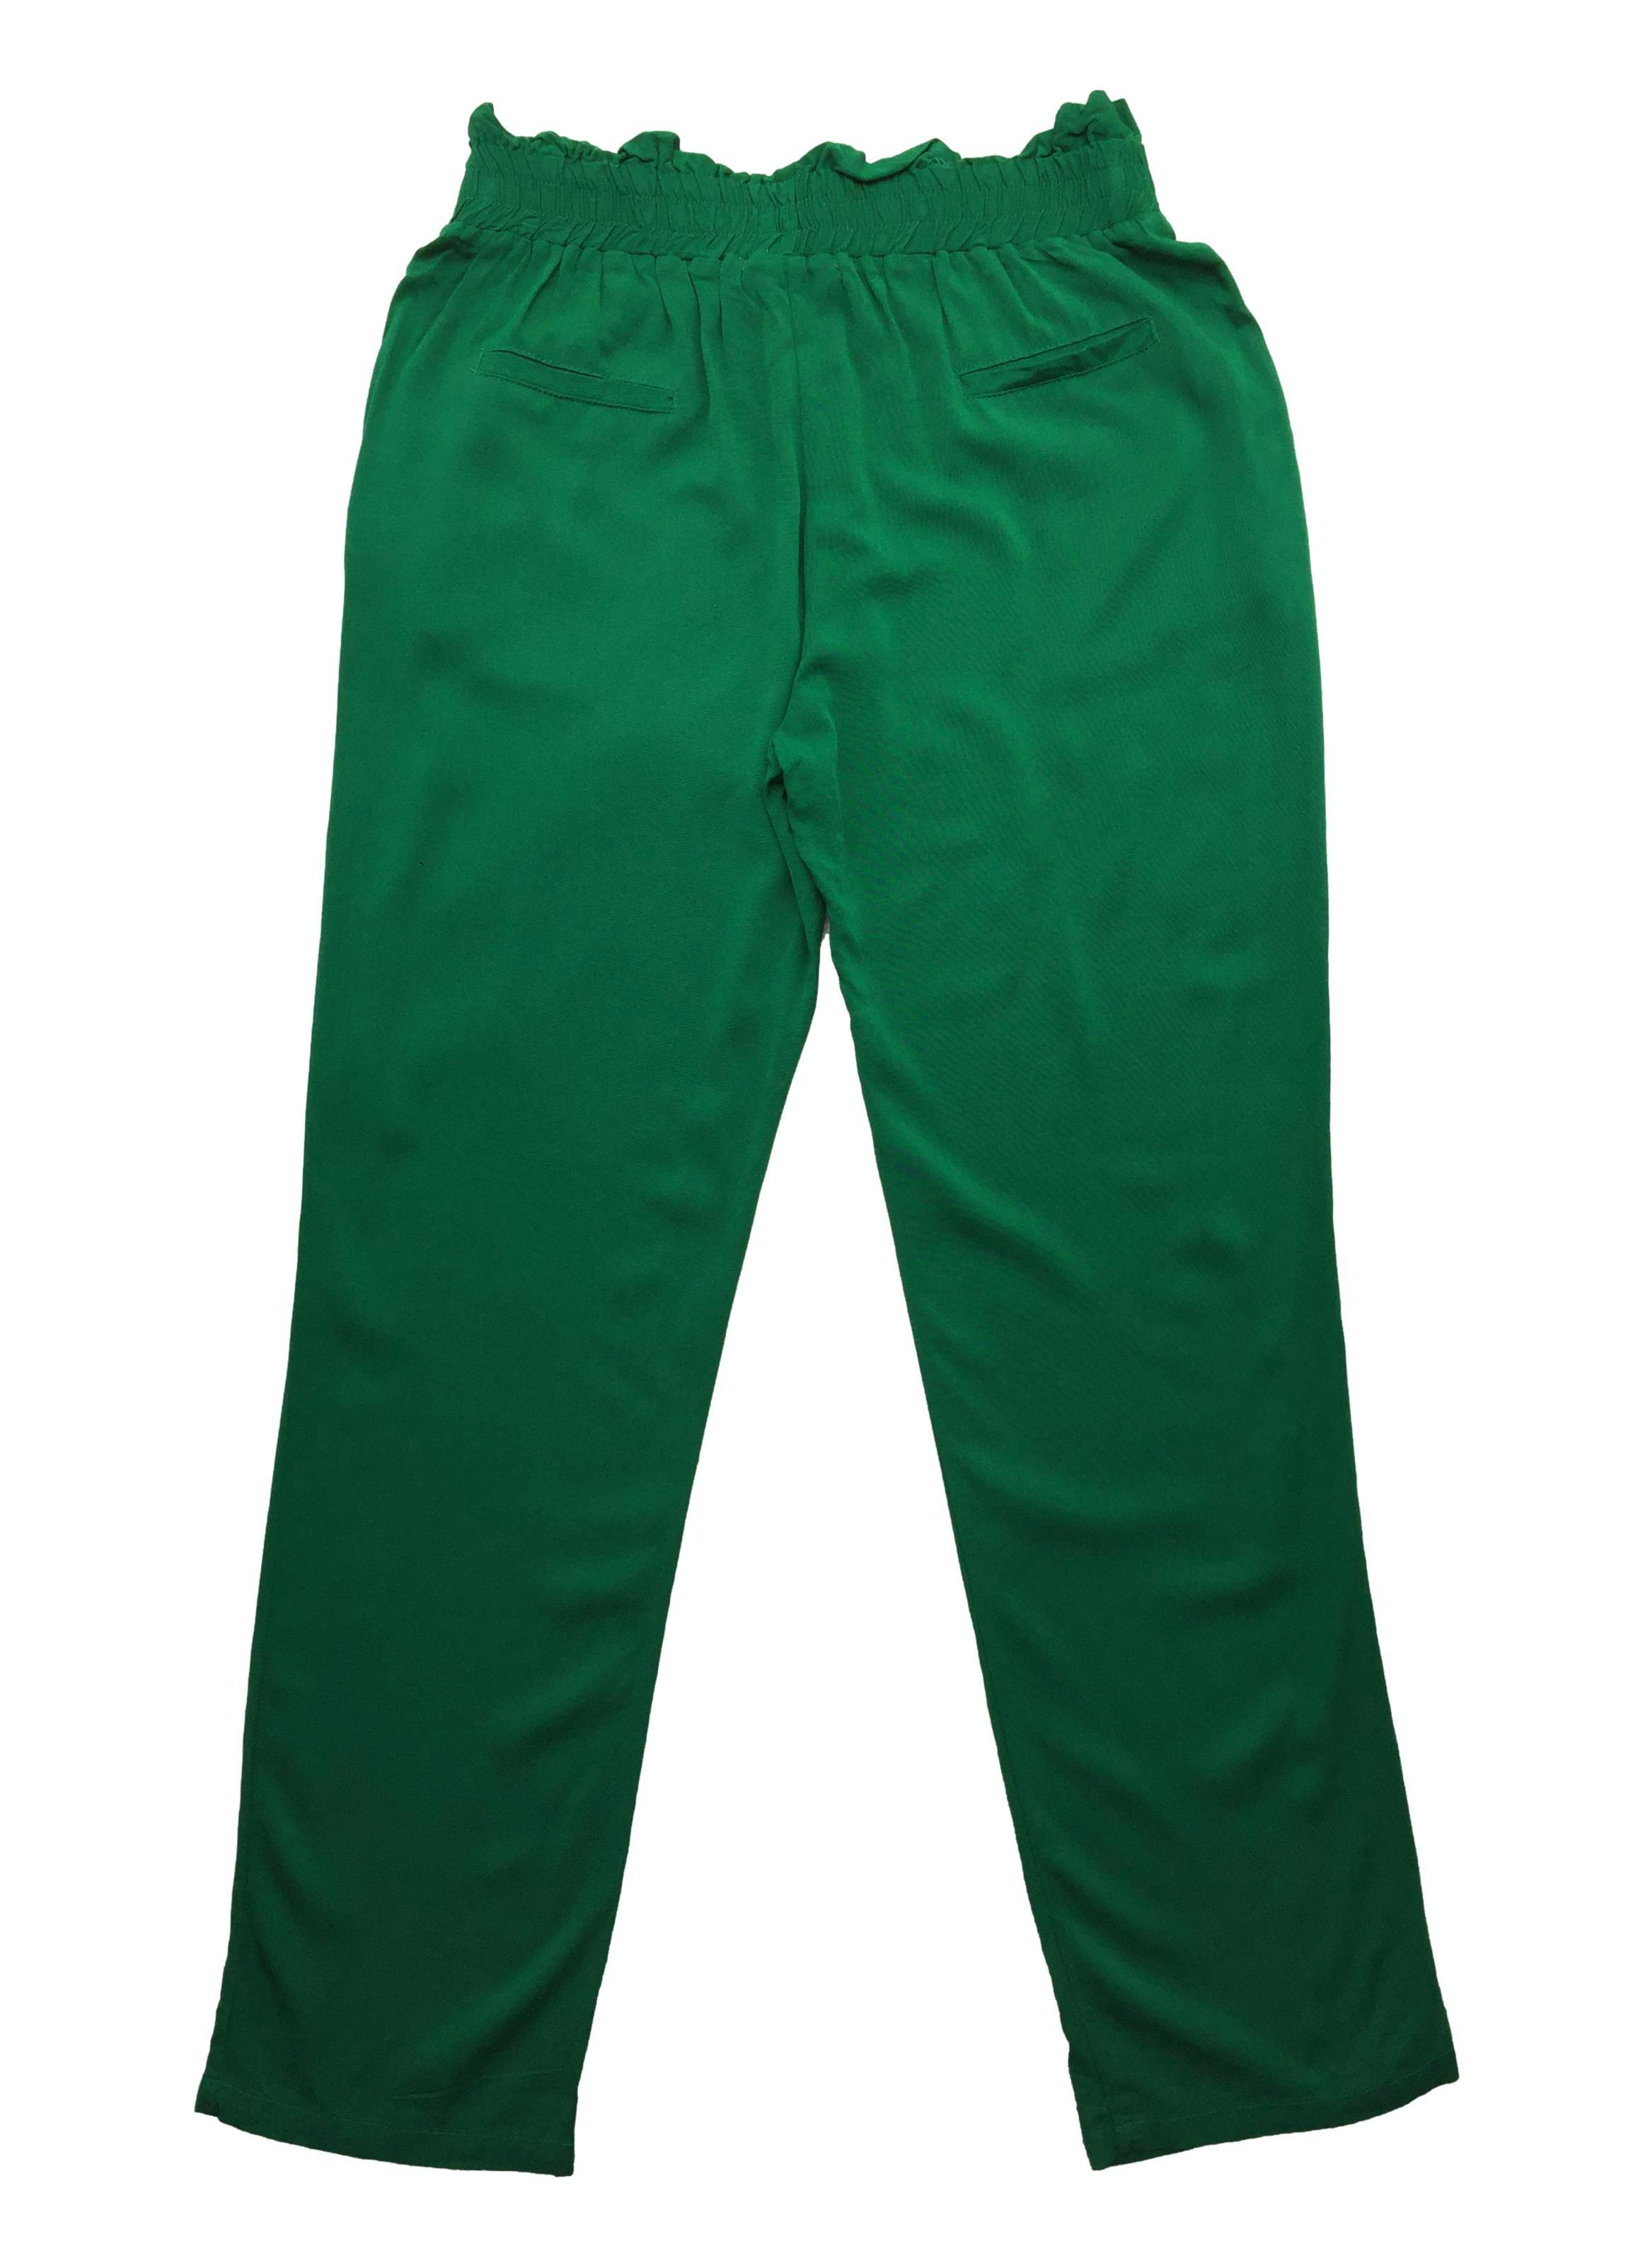 Pantalón Settimana verde, tela fresca, pretina y bolsillos laterales. Cintura 68cm Tiro 28cm Largo 92cm